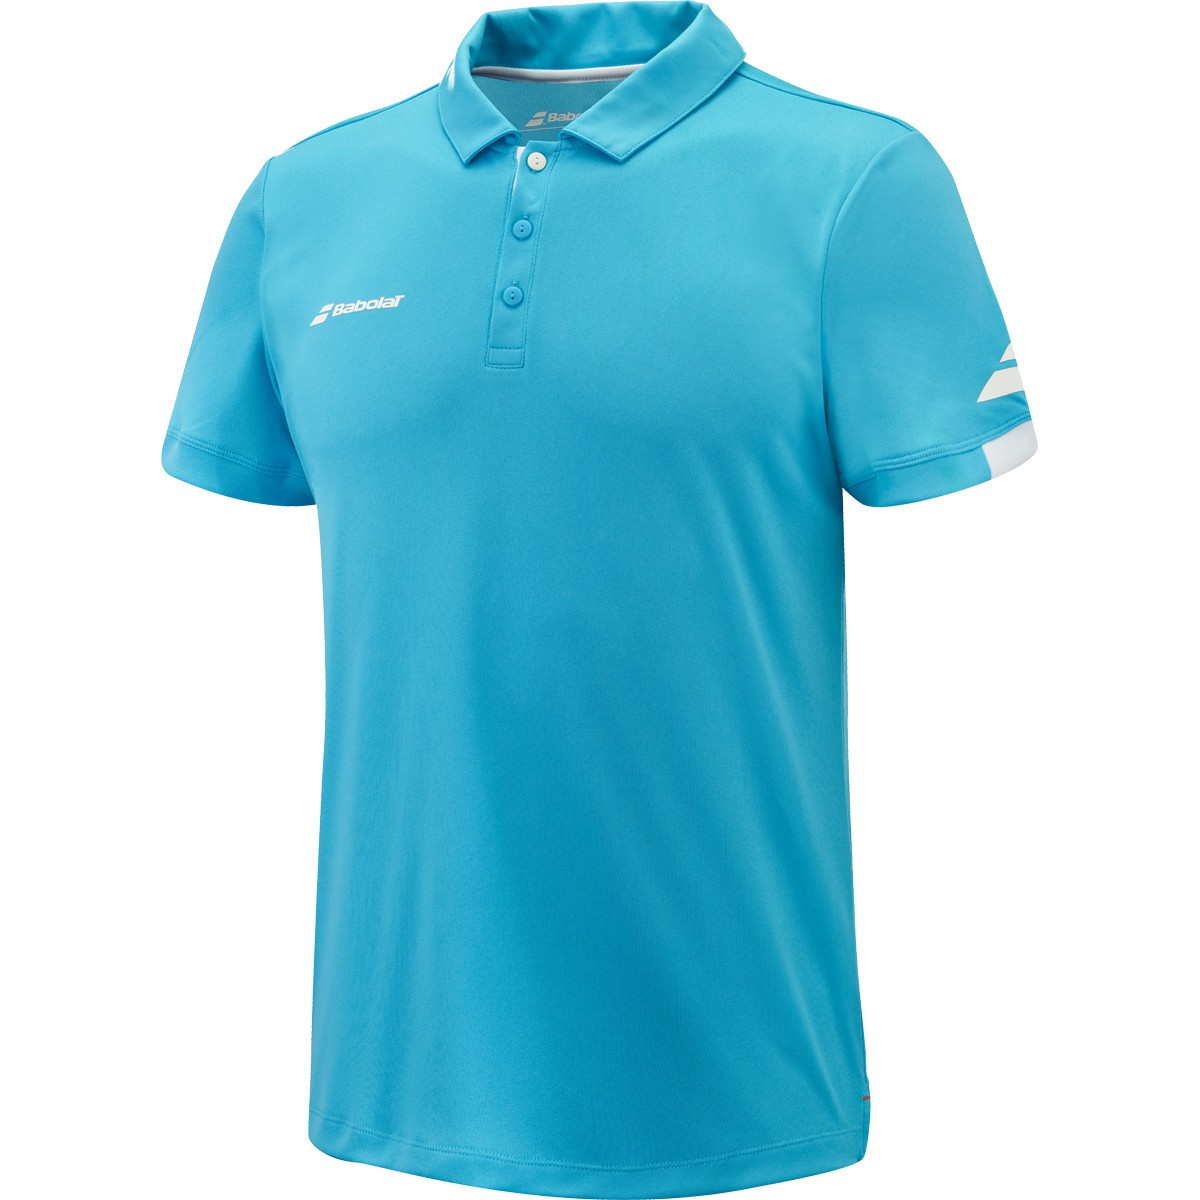 Теннисная футболка мужская Babolat Play Polo Men cyan blue/white поло